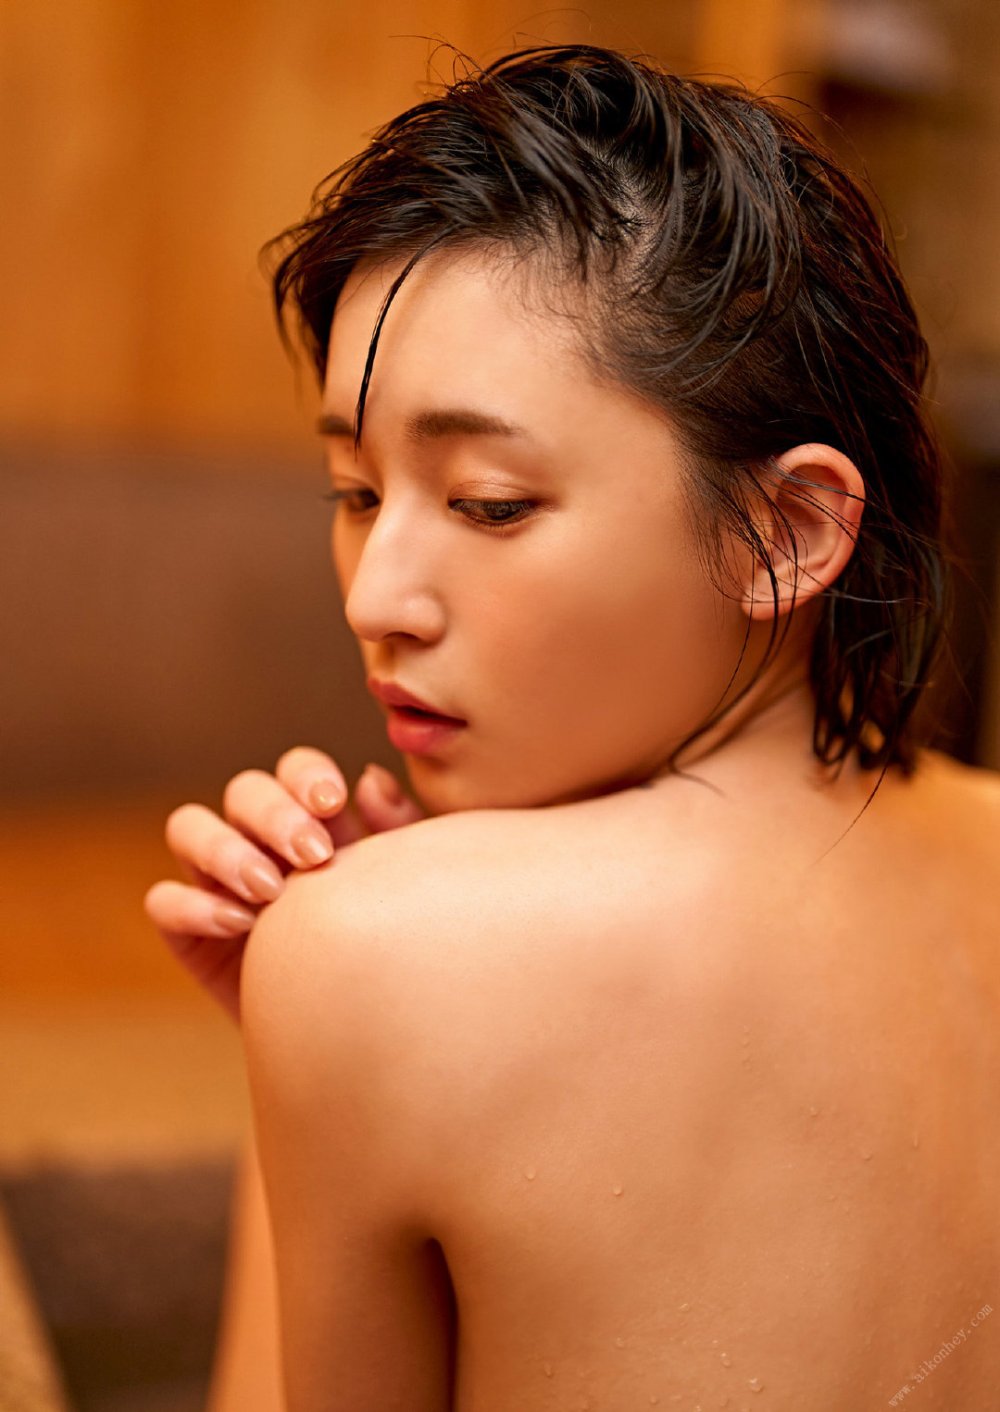 Nana Asakawa Sexy and Hottest Photos , Latest Pics